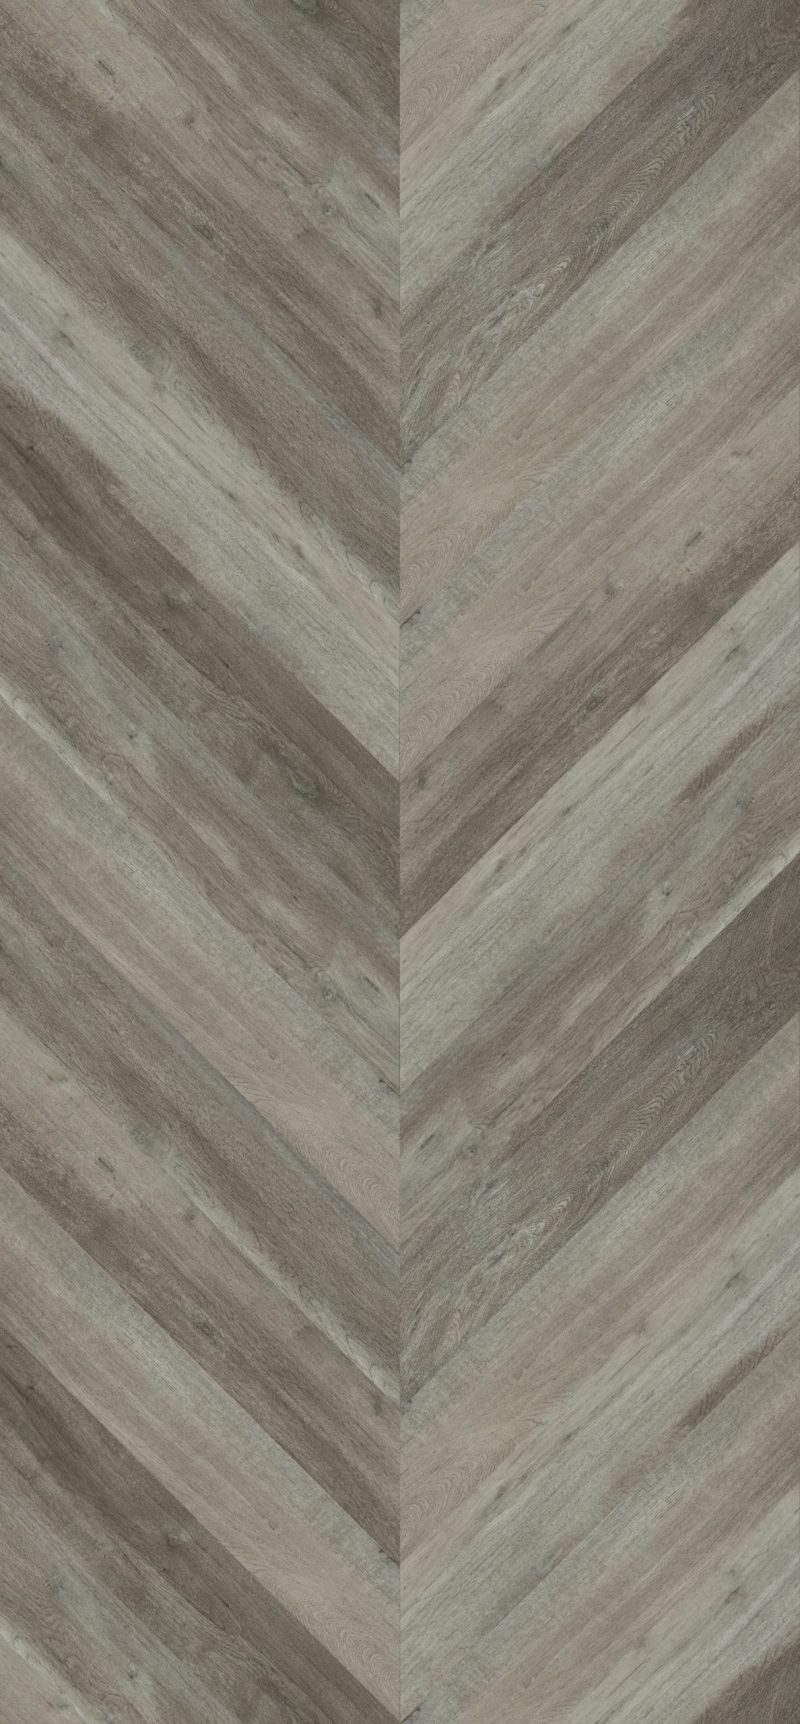 Vinilinės grindys lentelėmis Forbo Allura Wood grey autumn oak